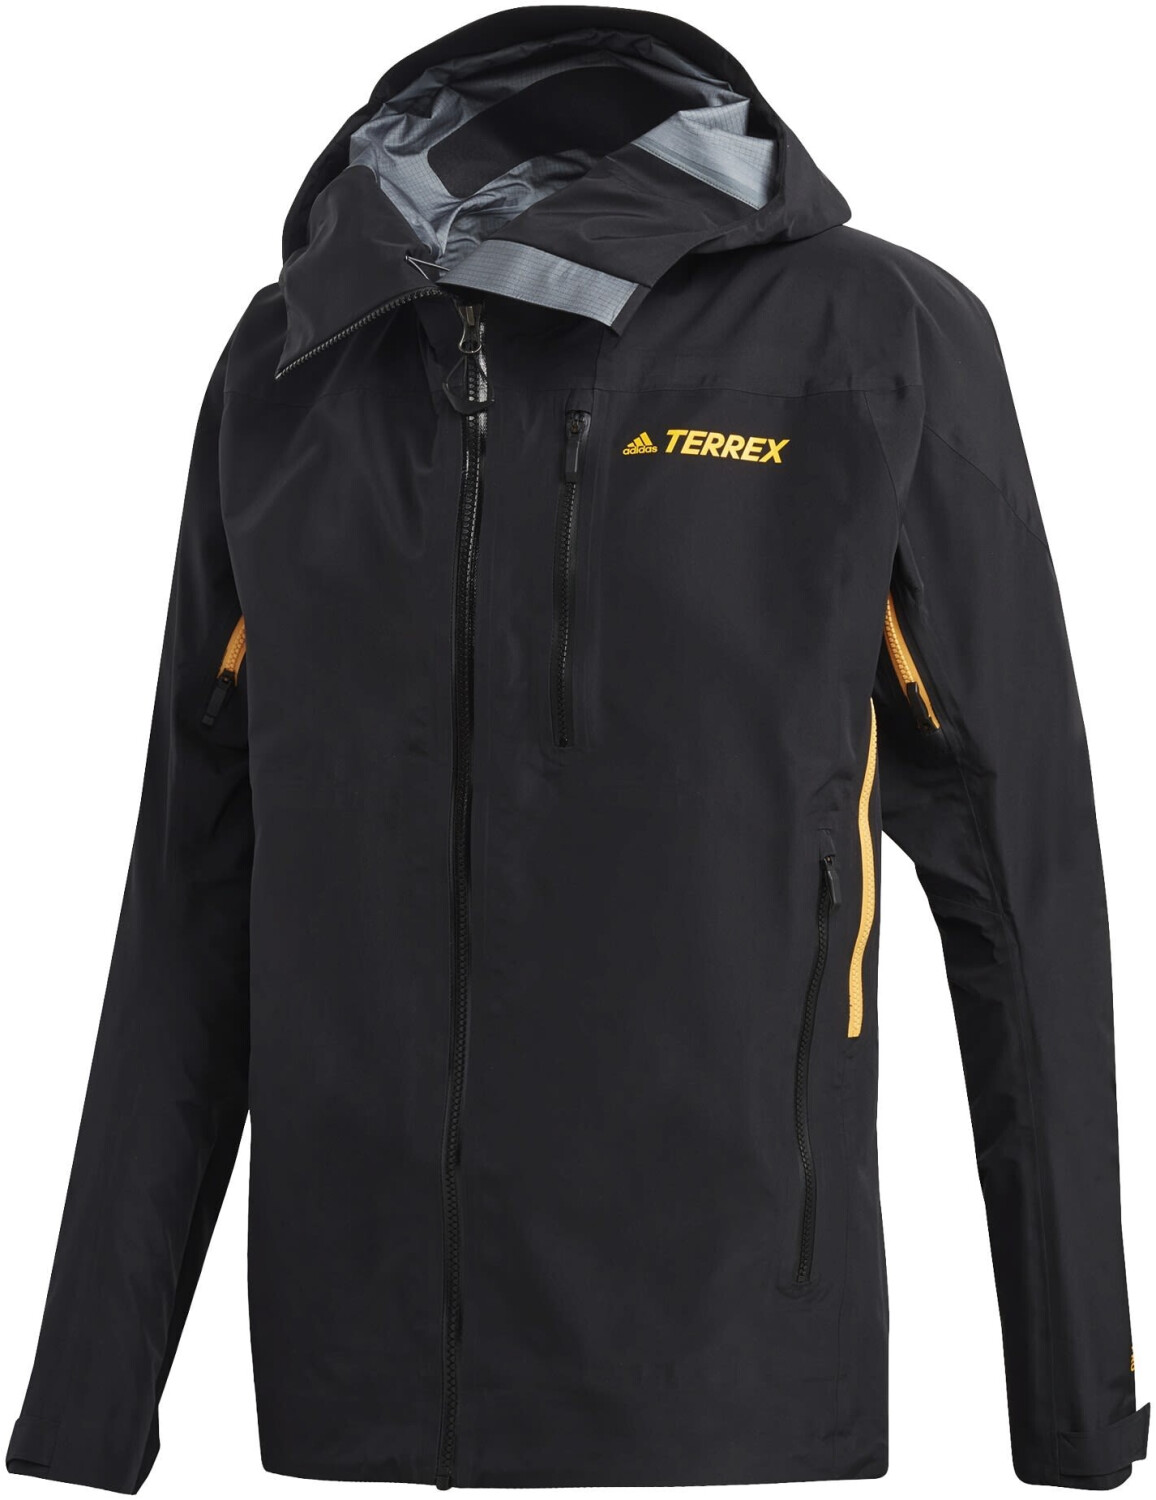 Adidas Men Terrex Techrock Gore Tex Pro Rain Jacket Ab 270 37 April 21 Preise Preisvergleich Bei Idealo De